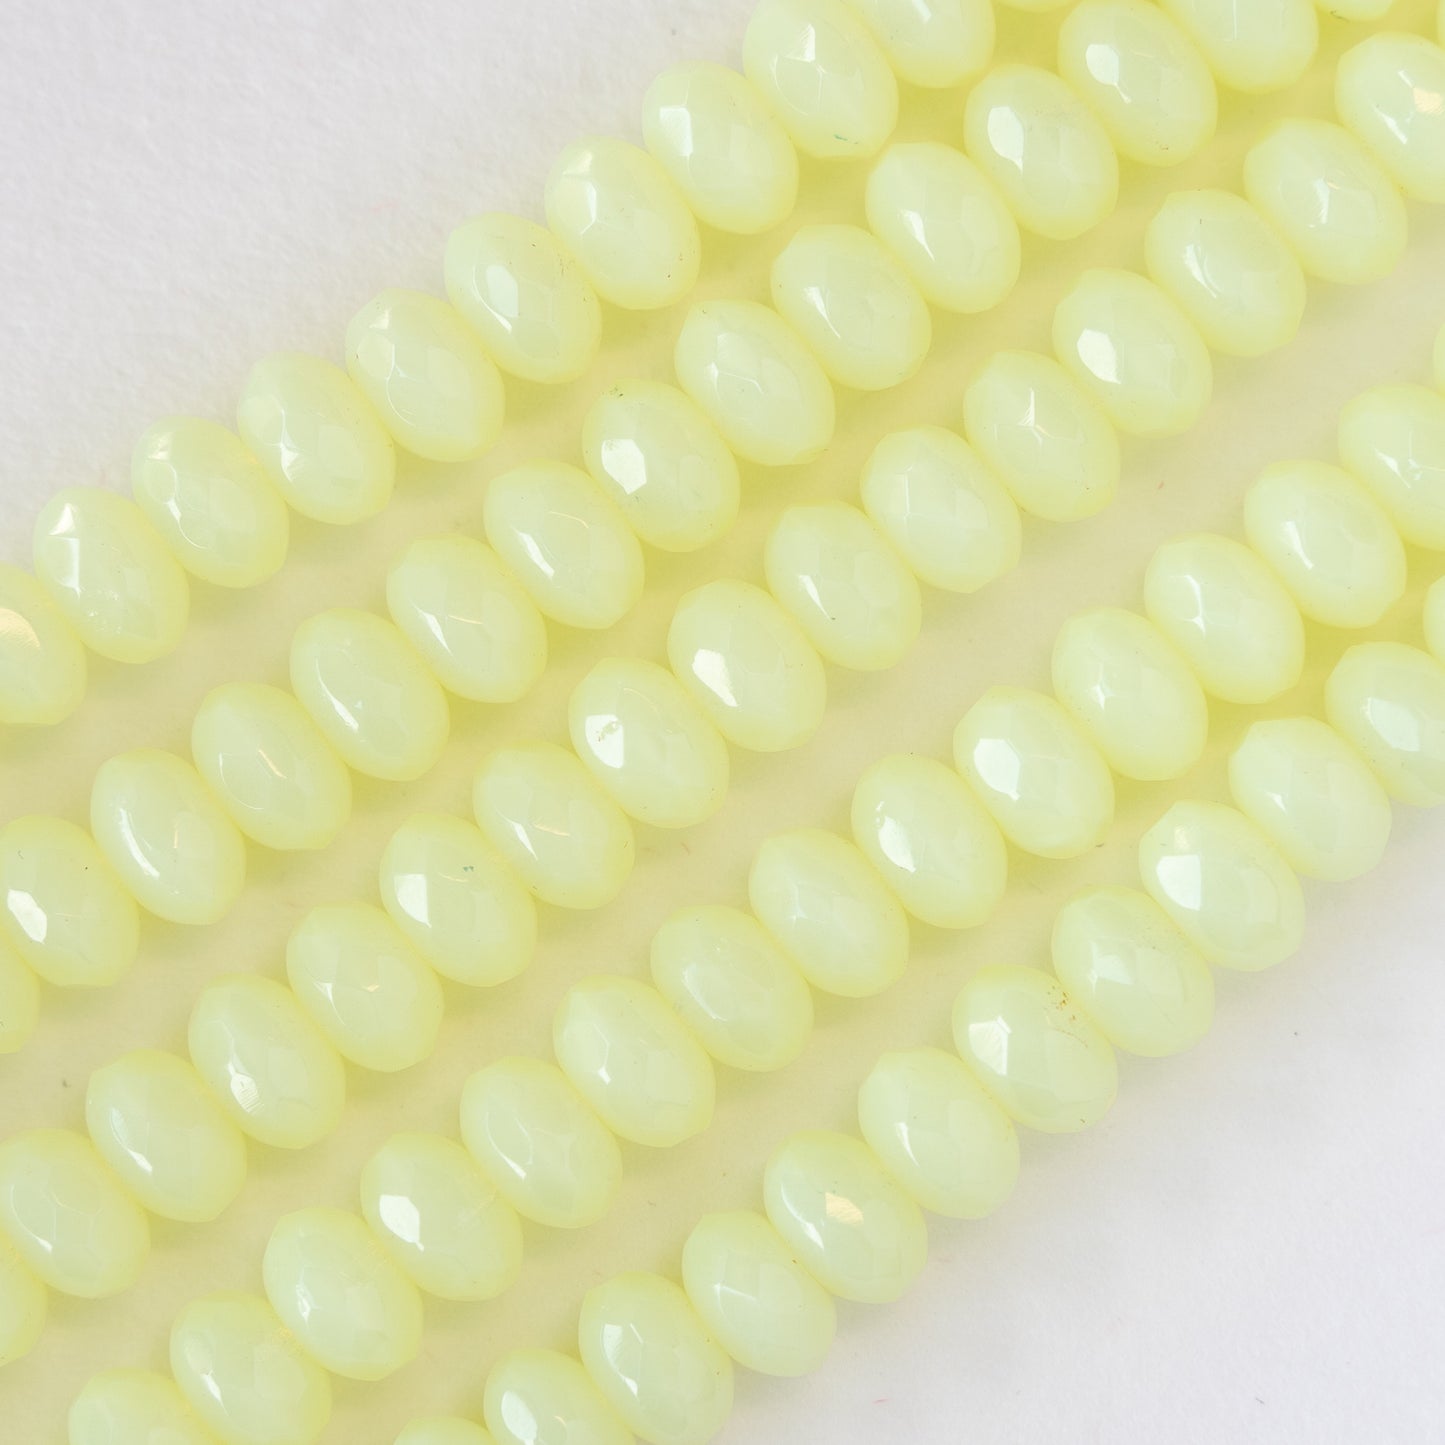 5x8mm Glass Rondelle Beads - Opaline Jonquil Yellow - 24 Beads